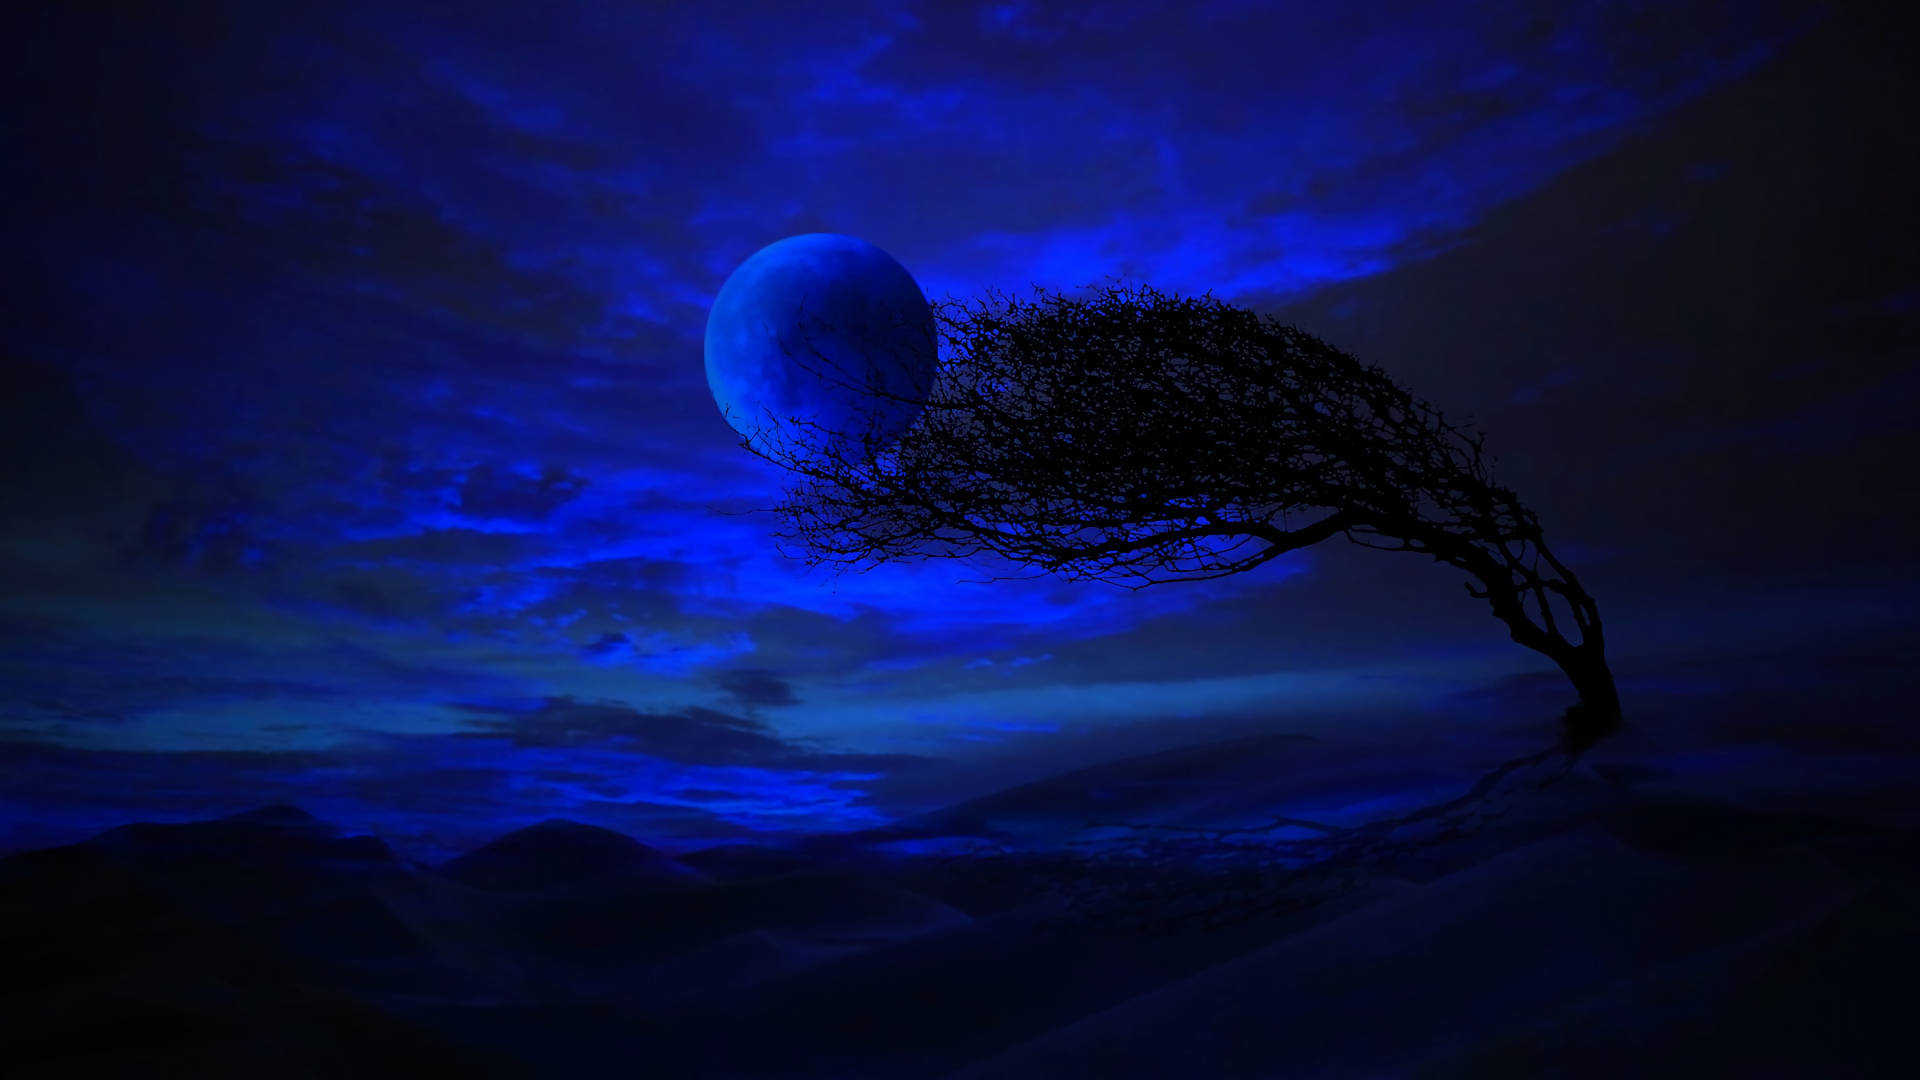 Artistic Blue-themed Hd Moon Wallpaper